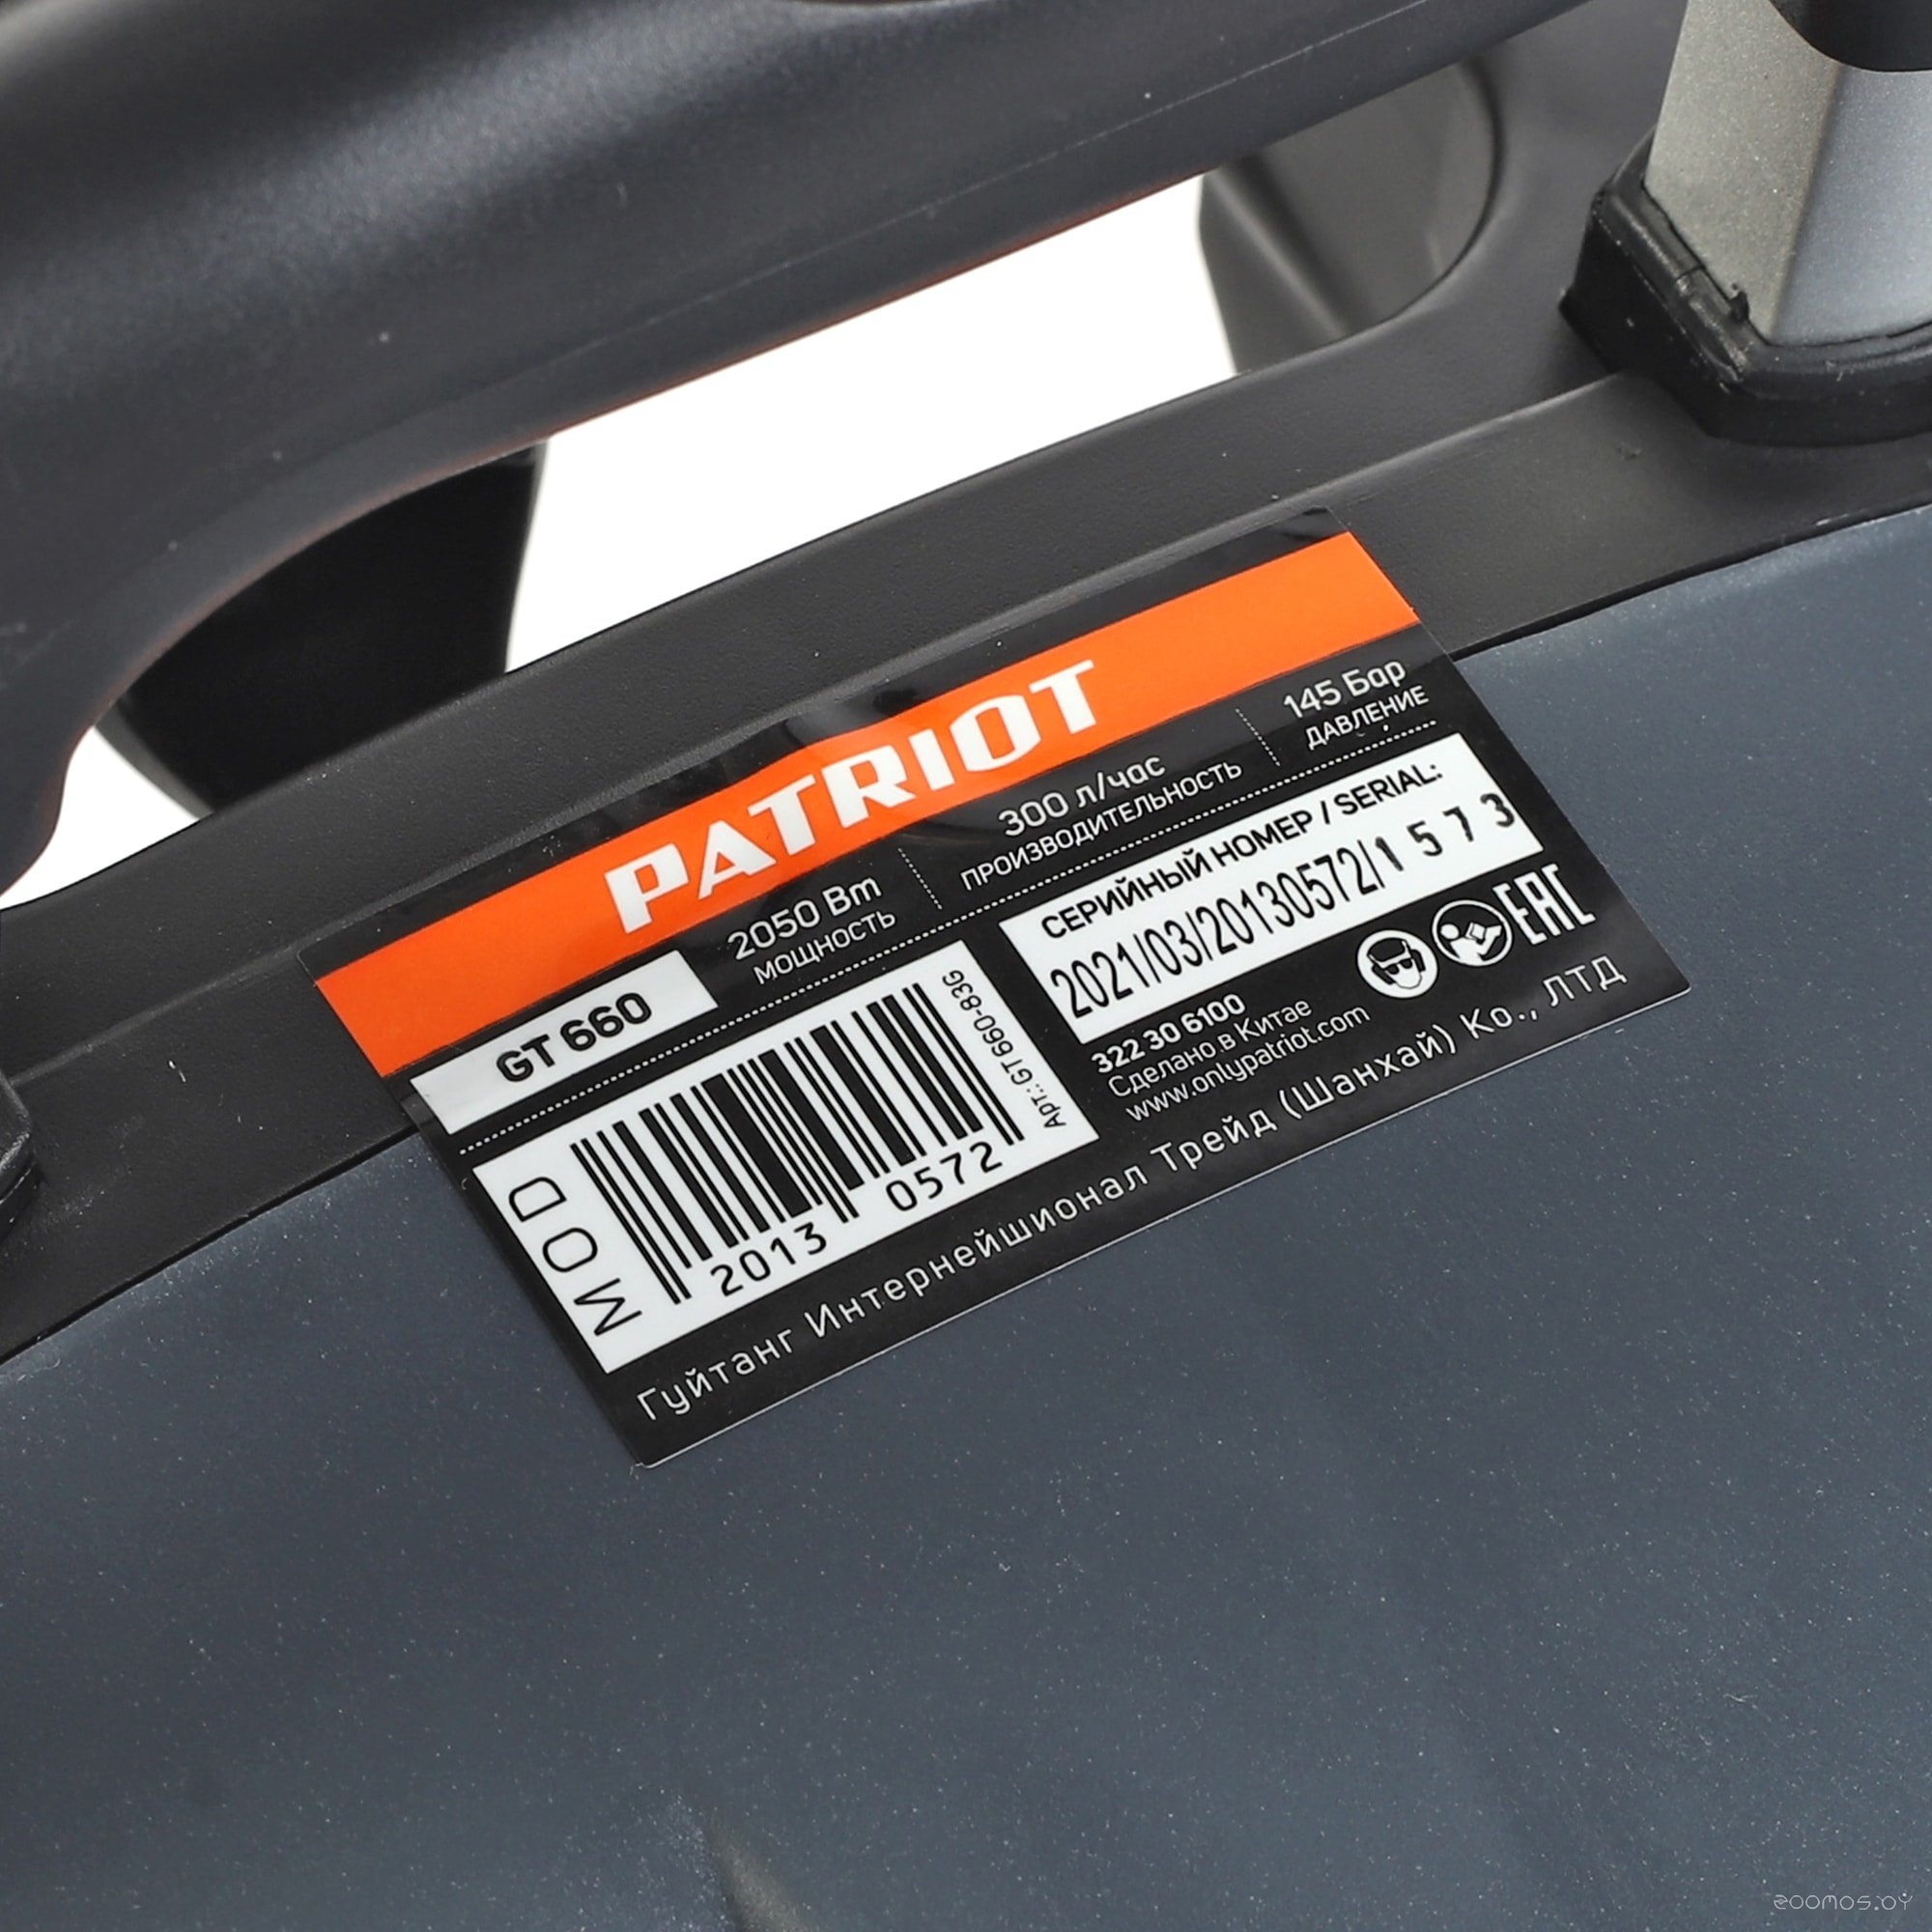    Patriot GT660 Imperial     